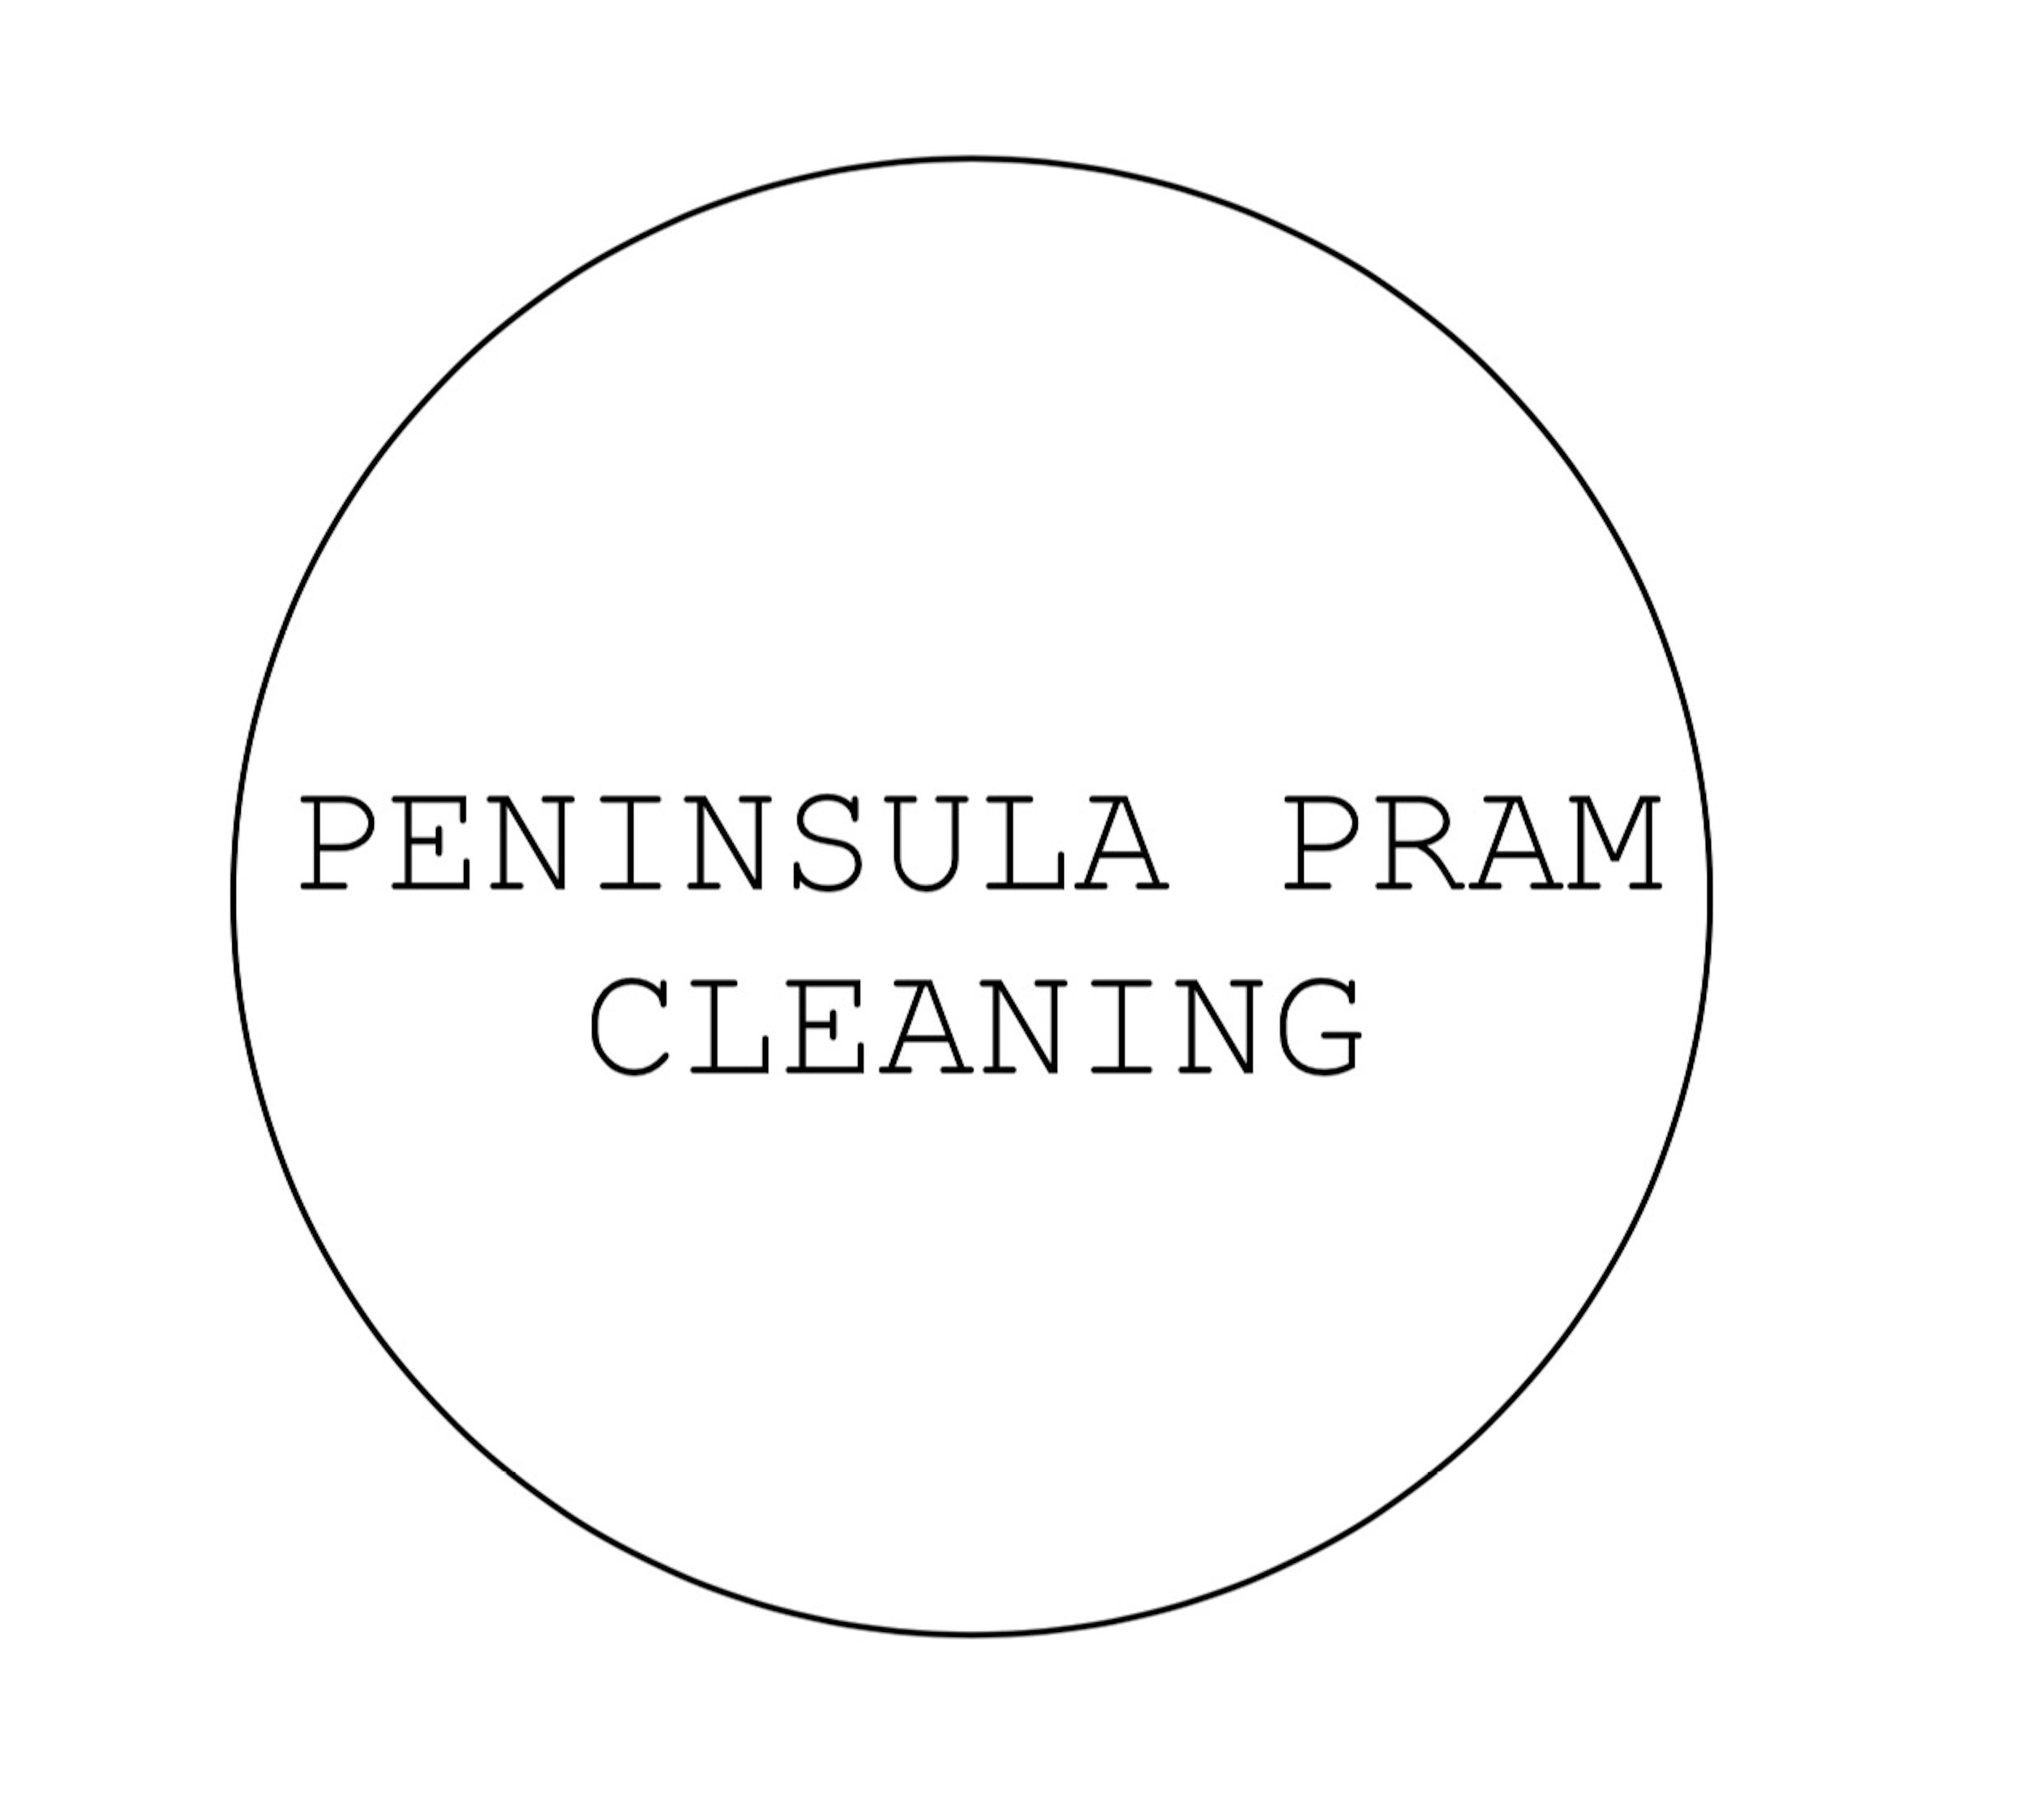 Peninsula Pram Cleaning